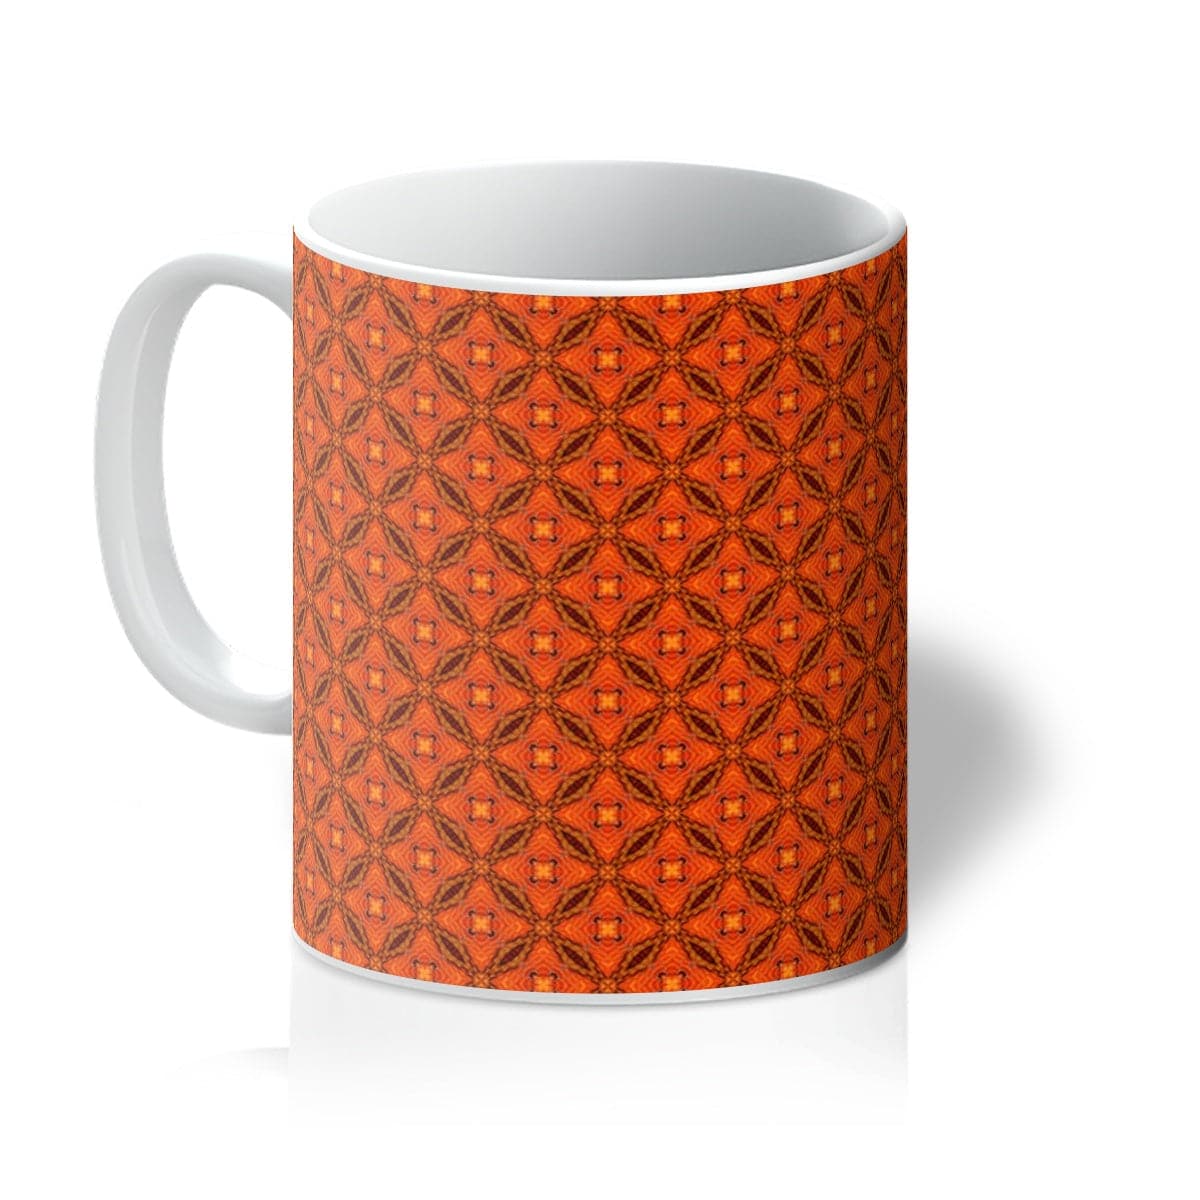 Orange Snake Skine fine Pattern Mug